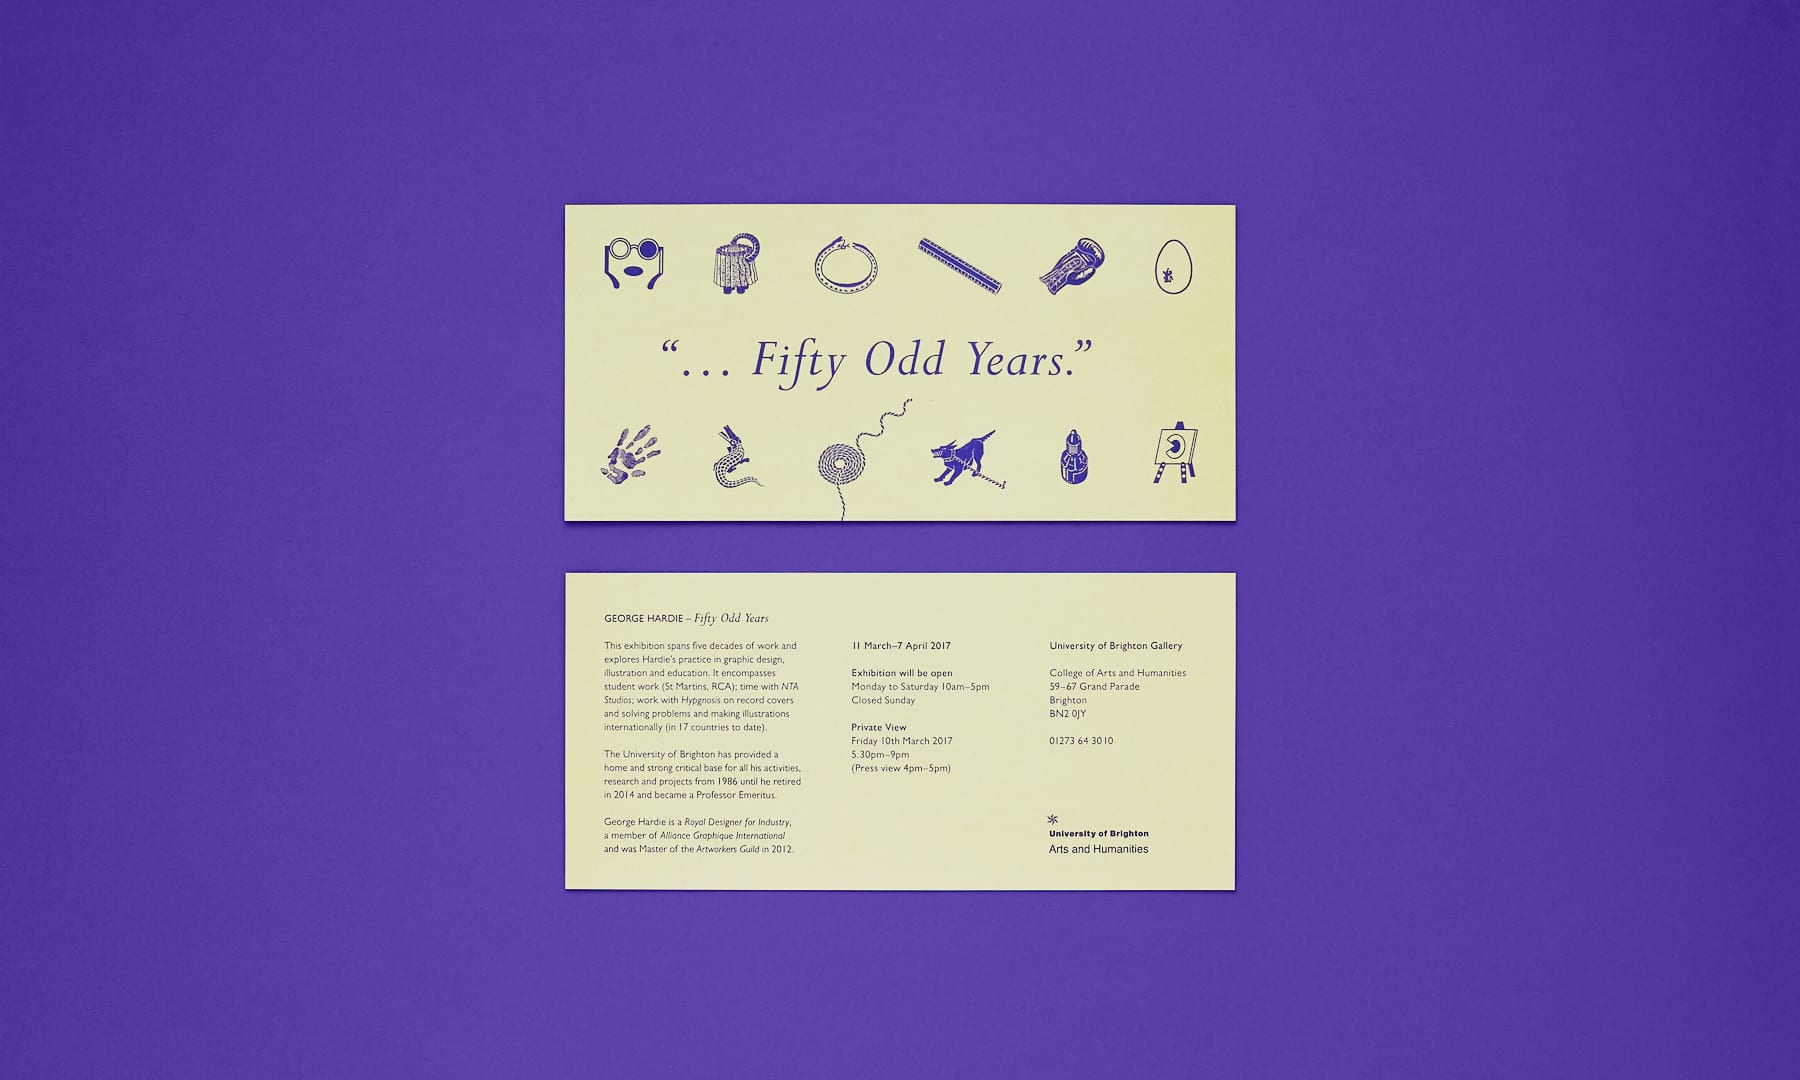 Fifty Odd Years - George Hardie - printed invitation 1